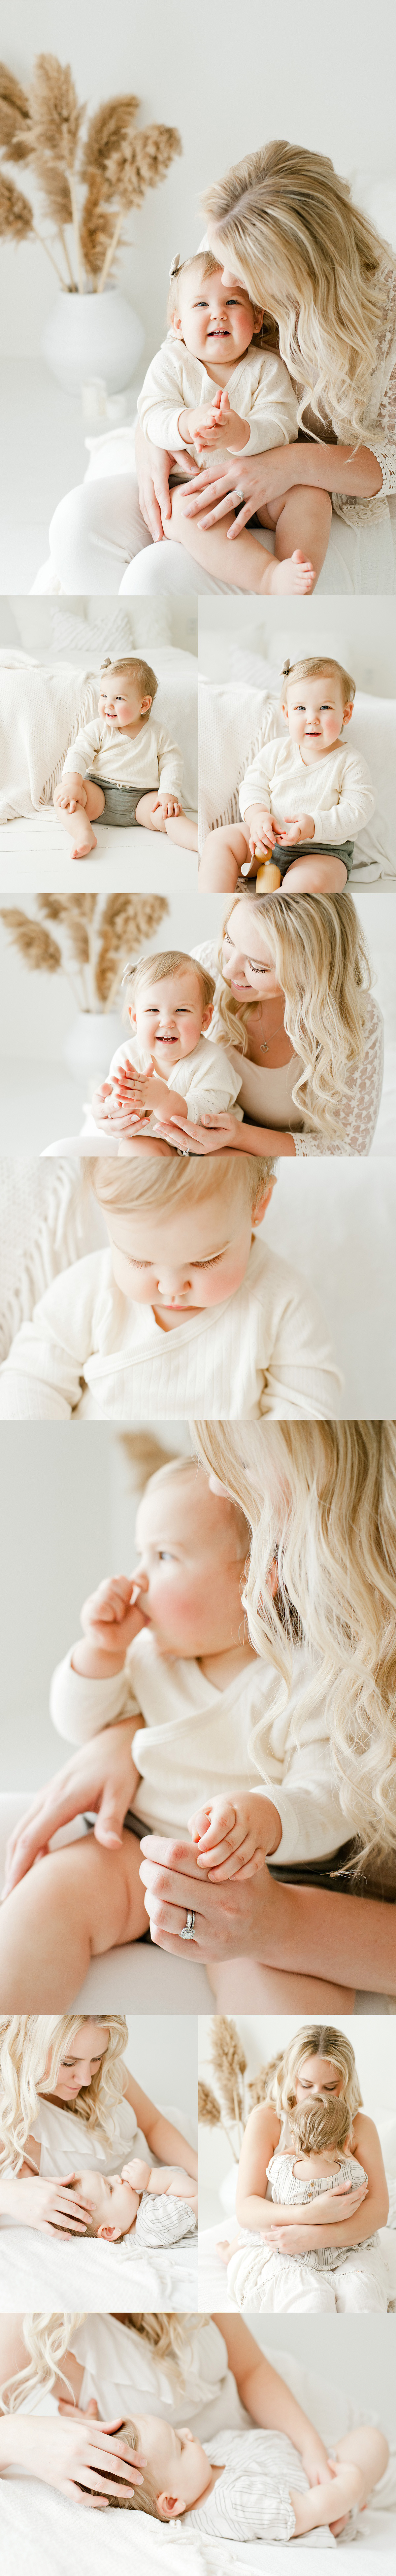 baby girl portraits in white studio